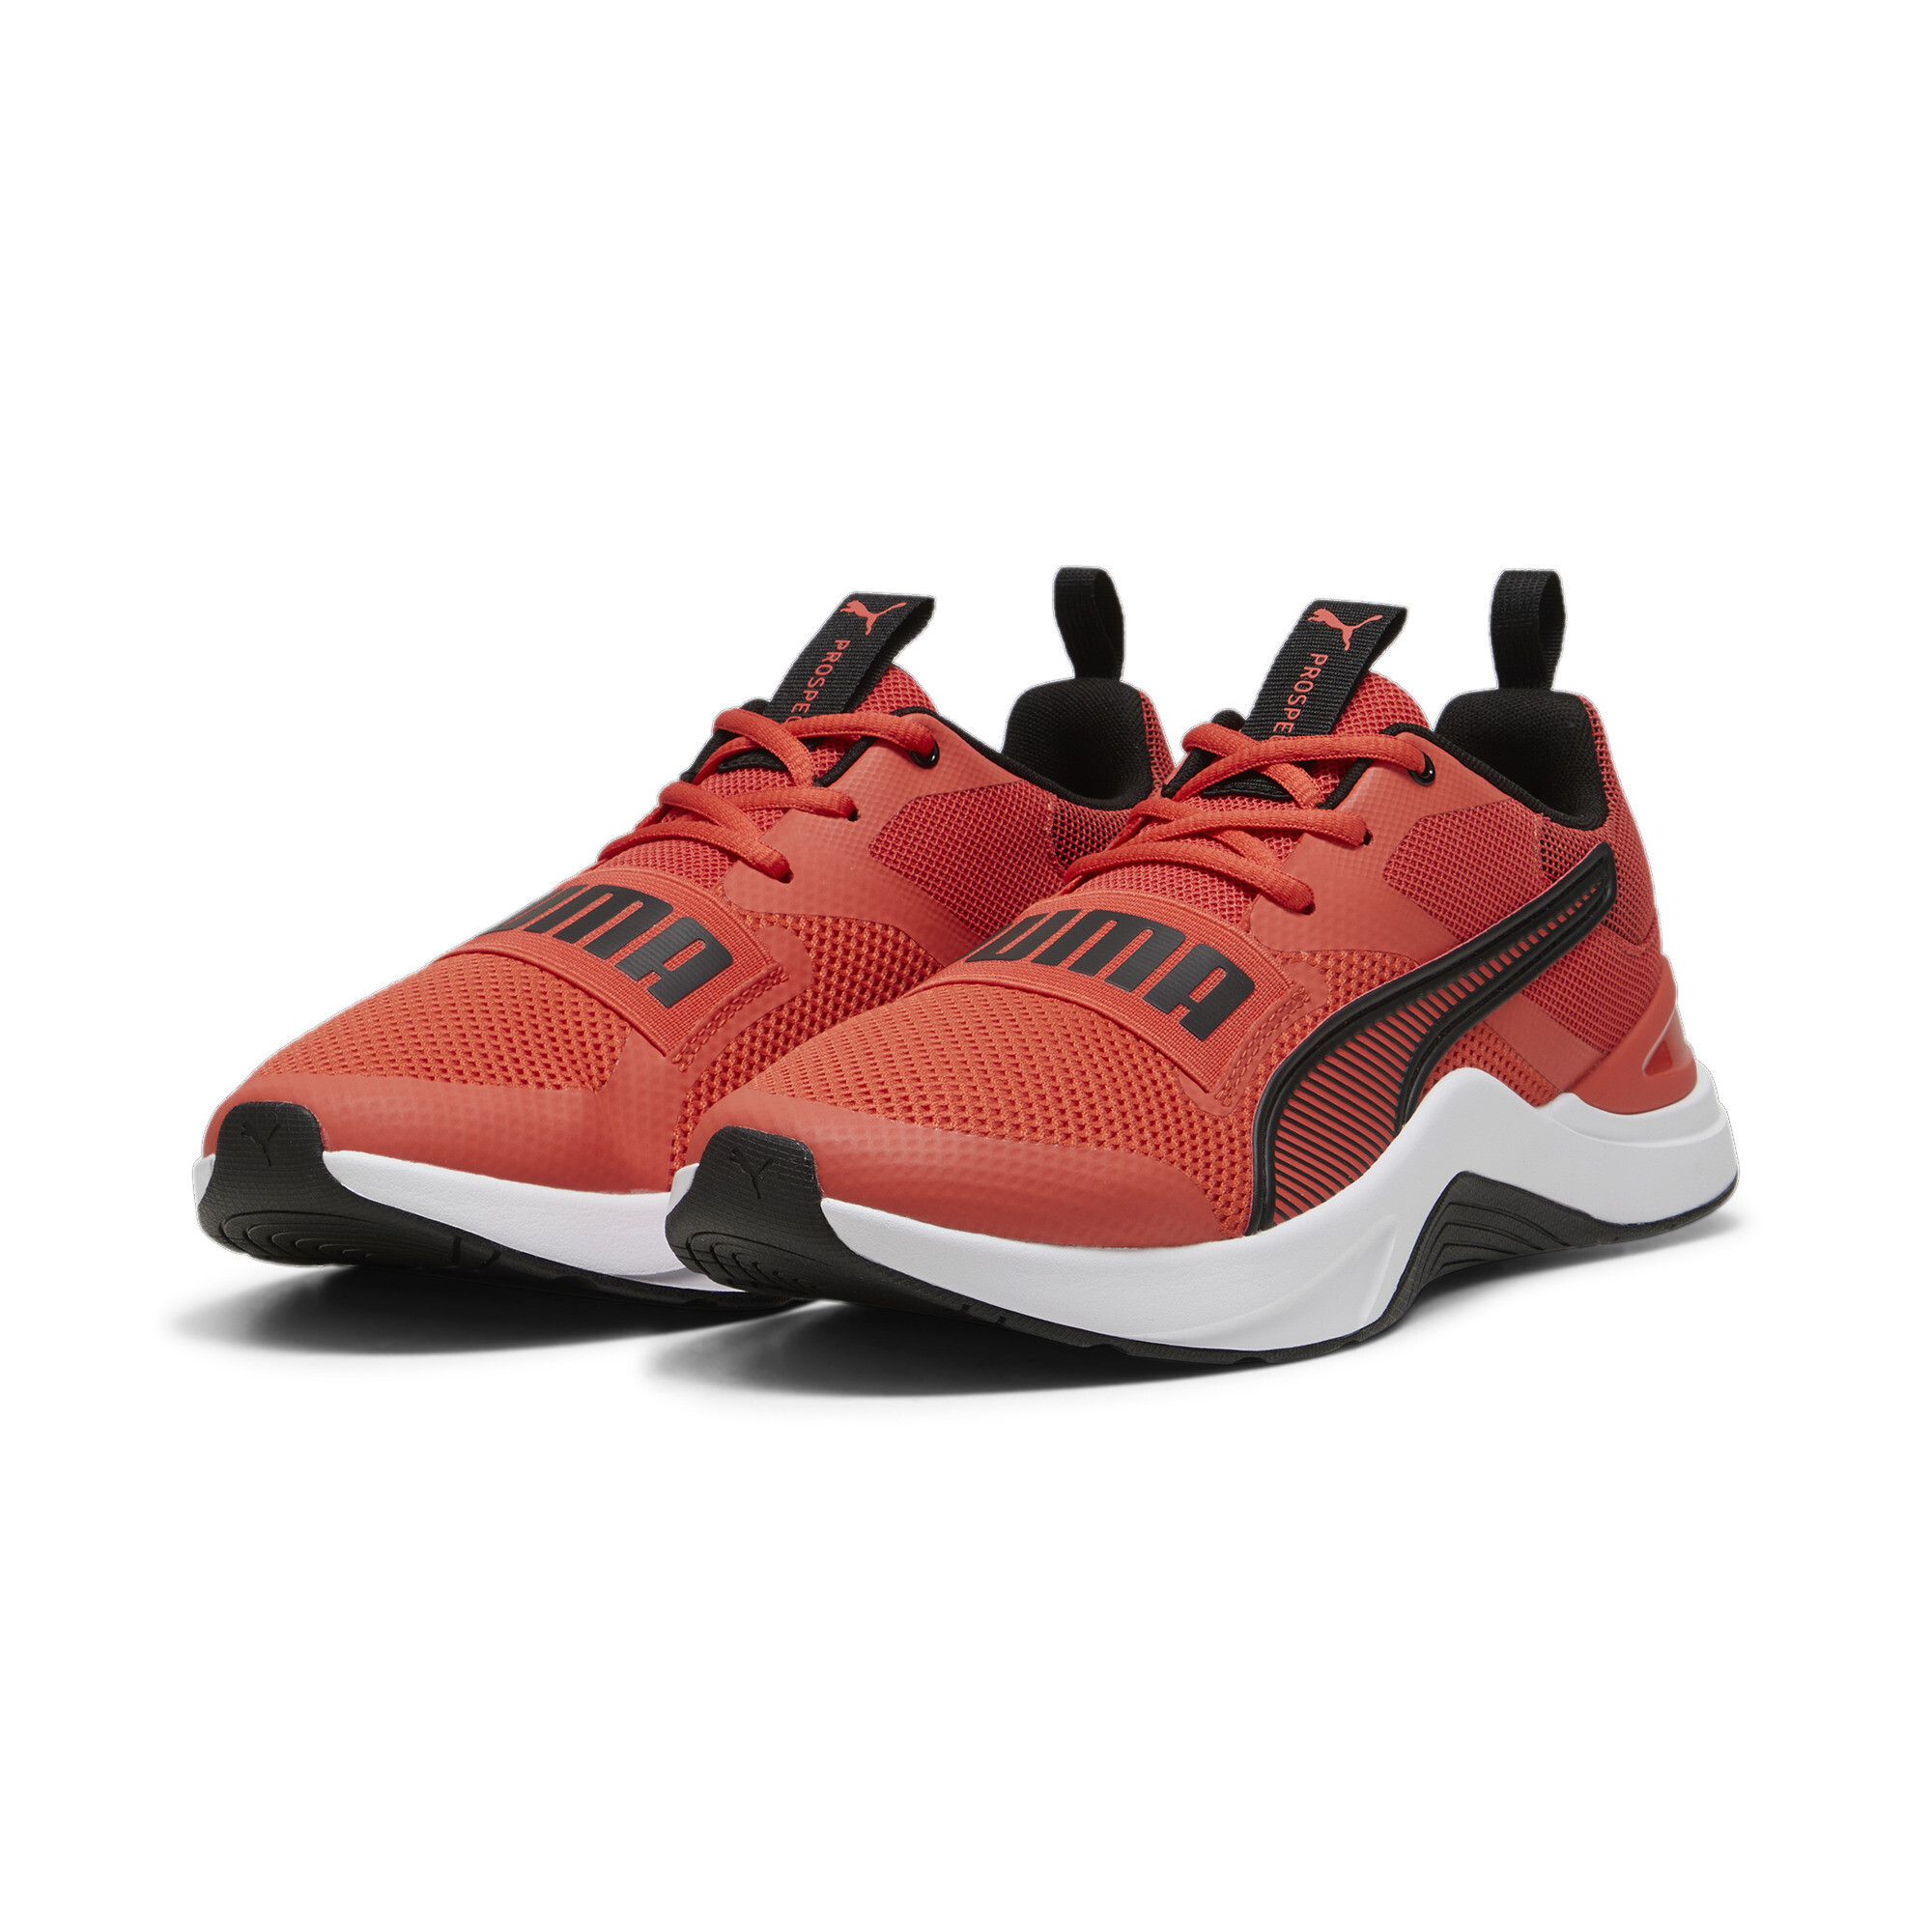 Men's PUMA Prospect Training Shoes In Red, Size EU 45